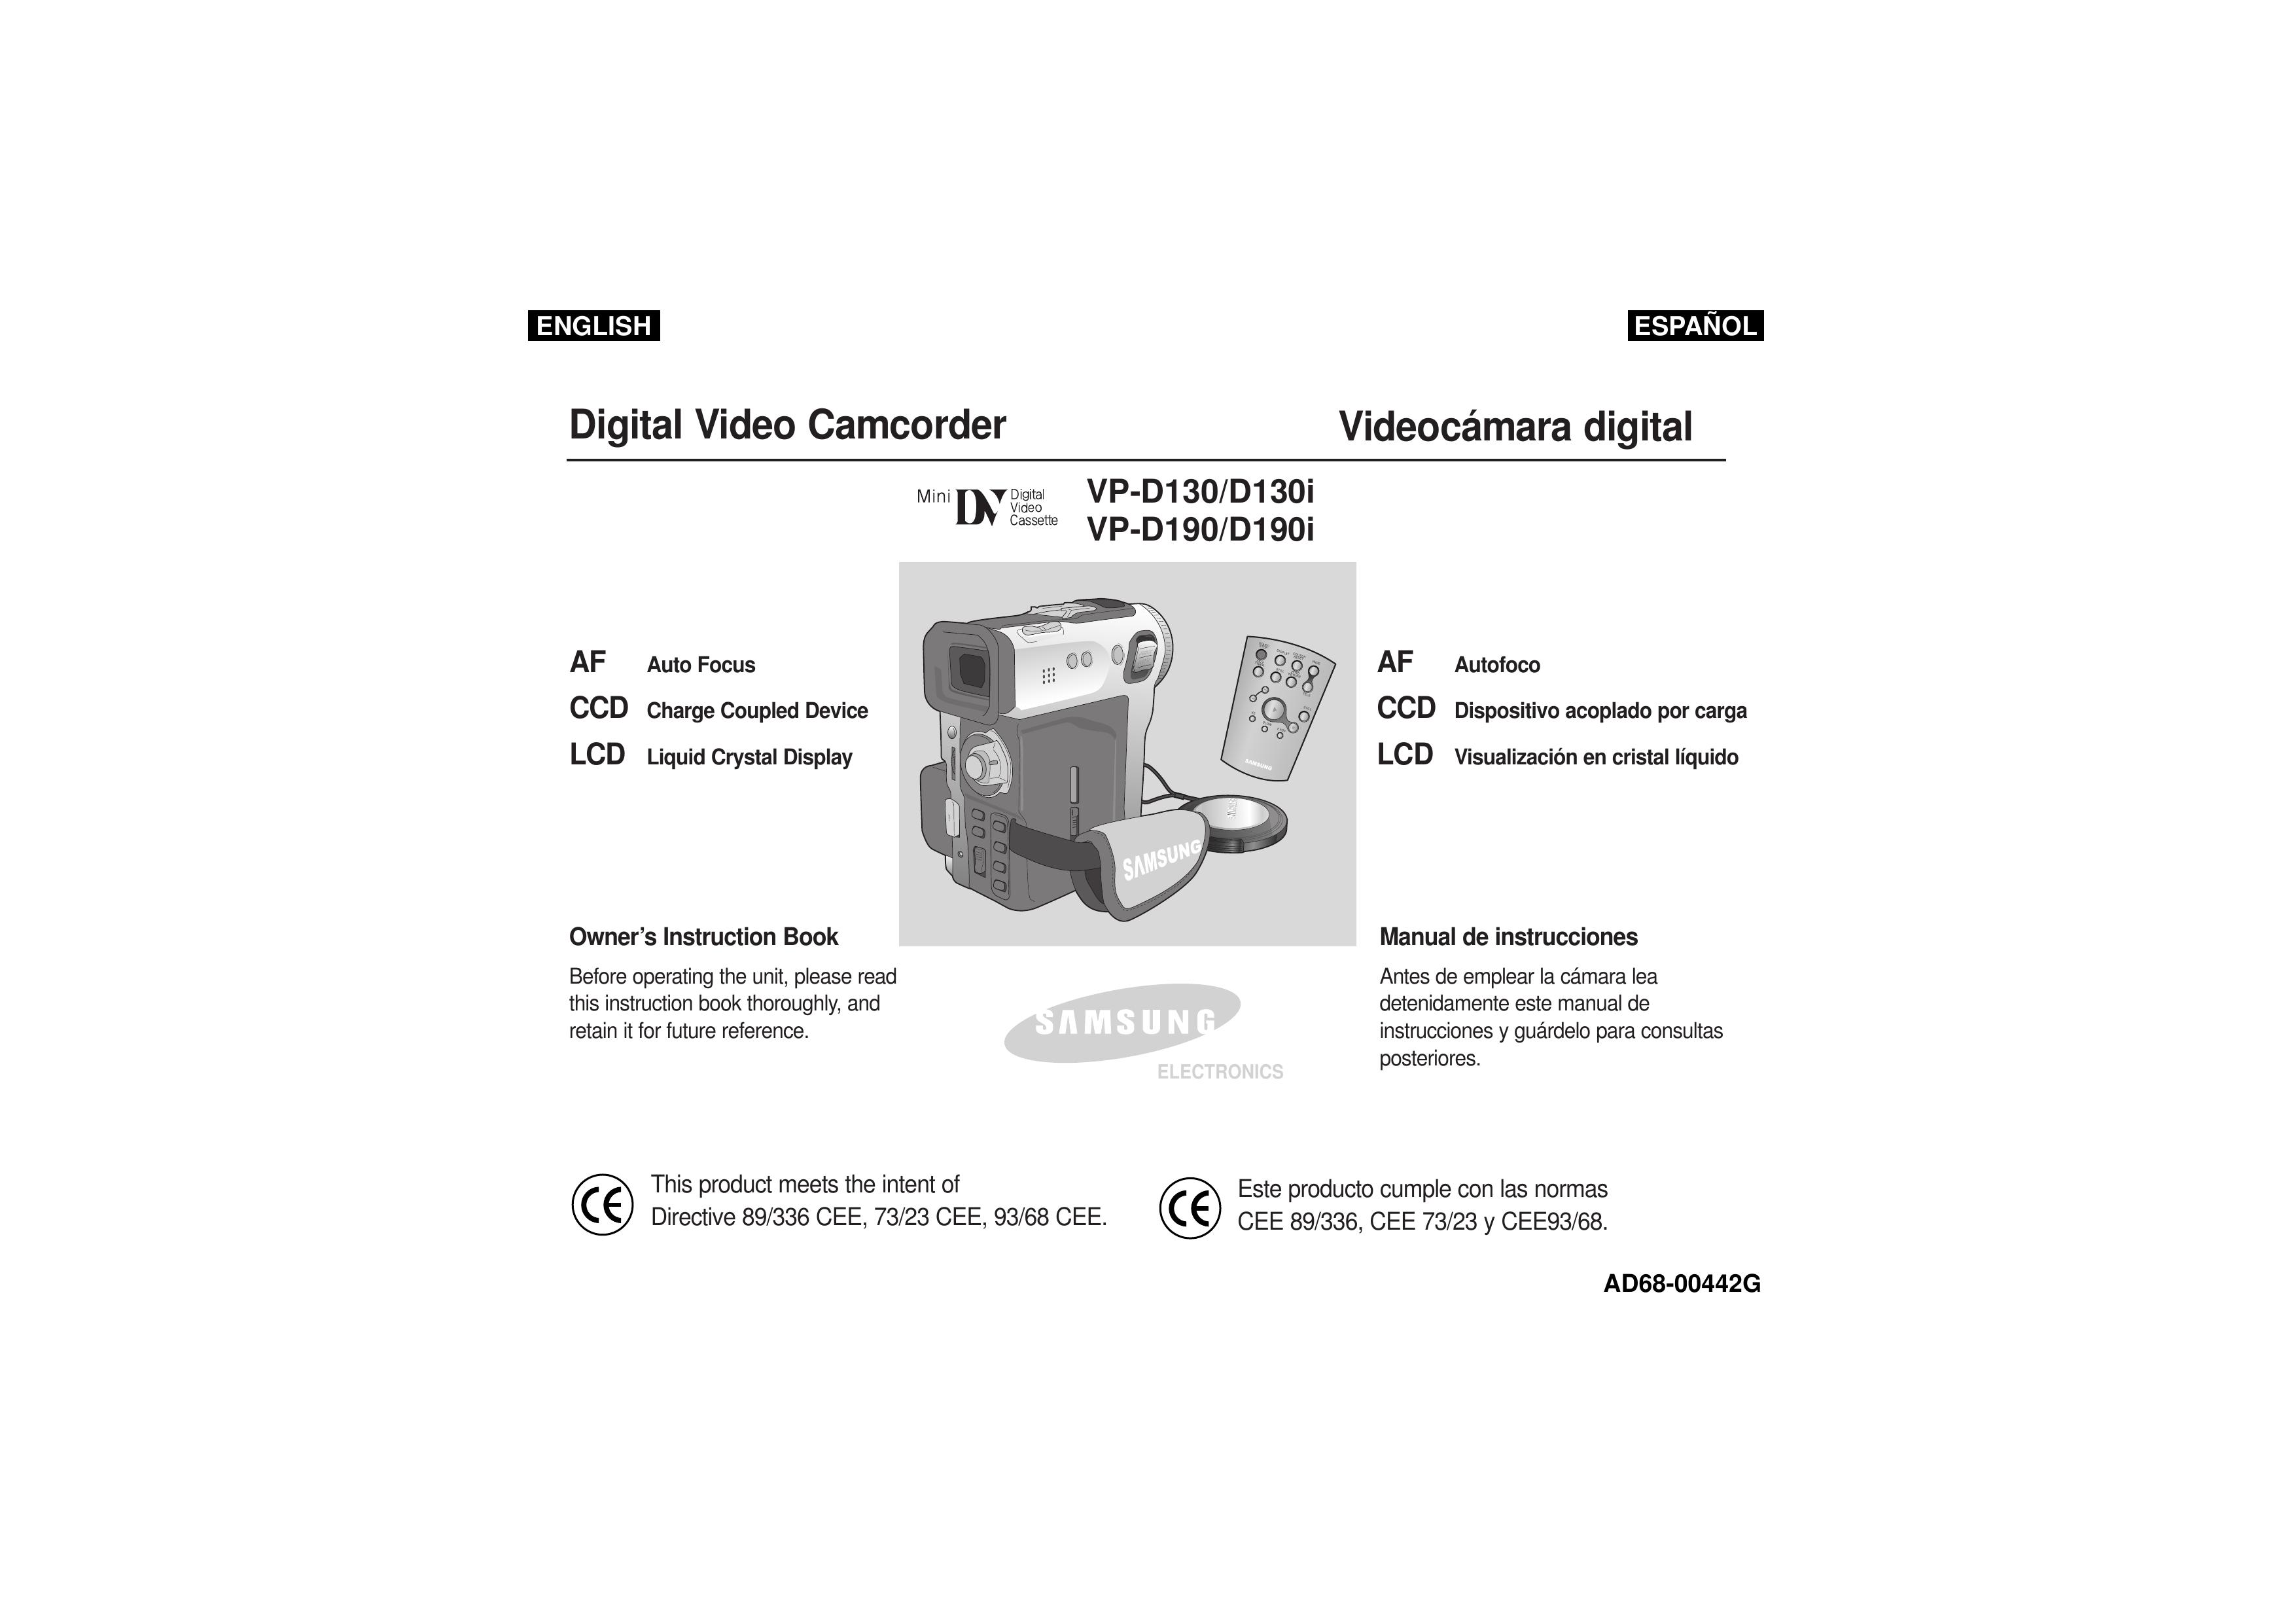 Samsung AD68-00442G Camcorder User Manual